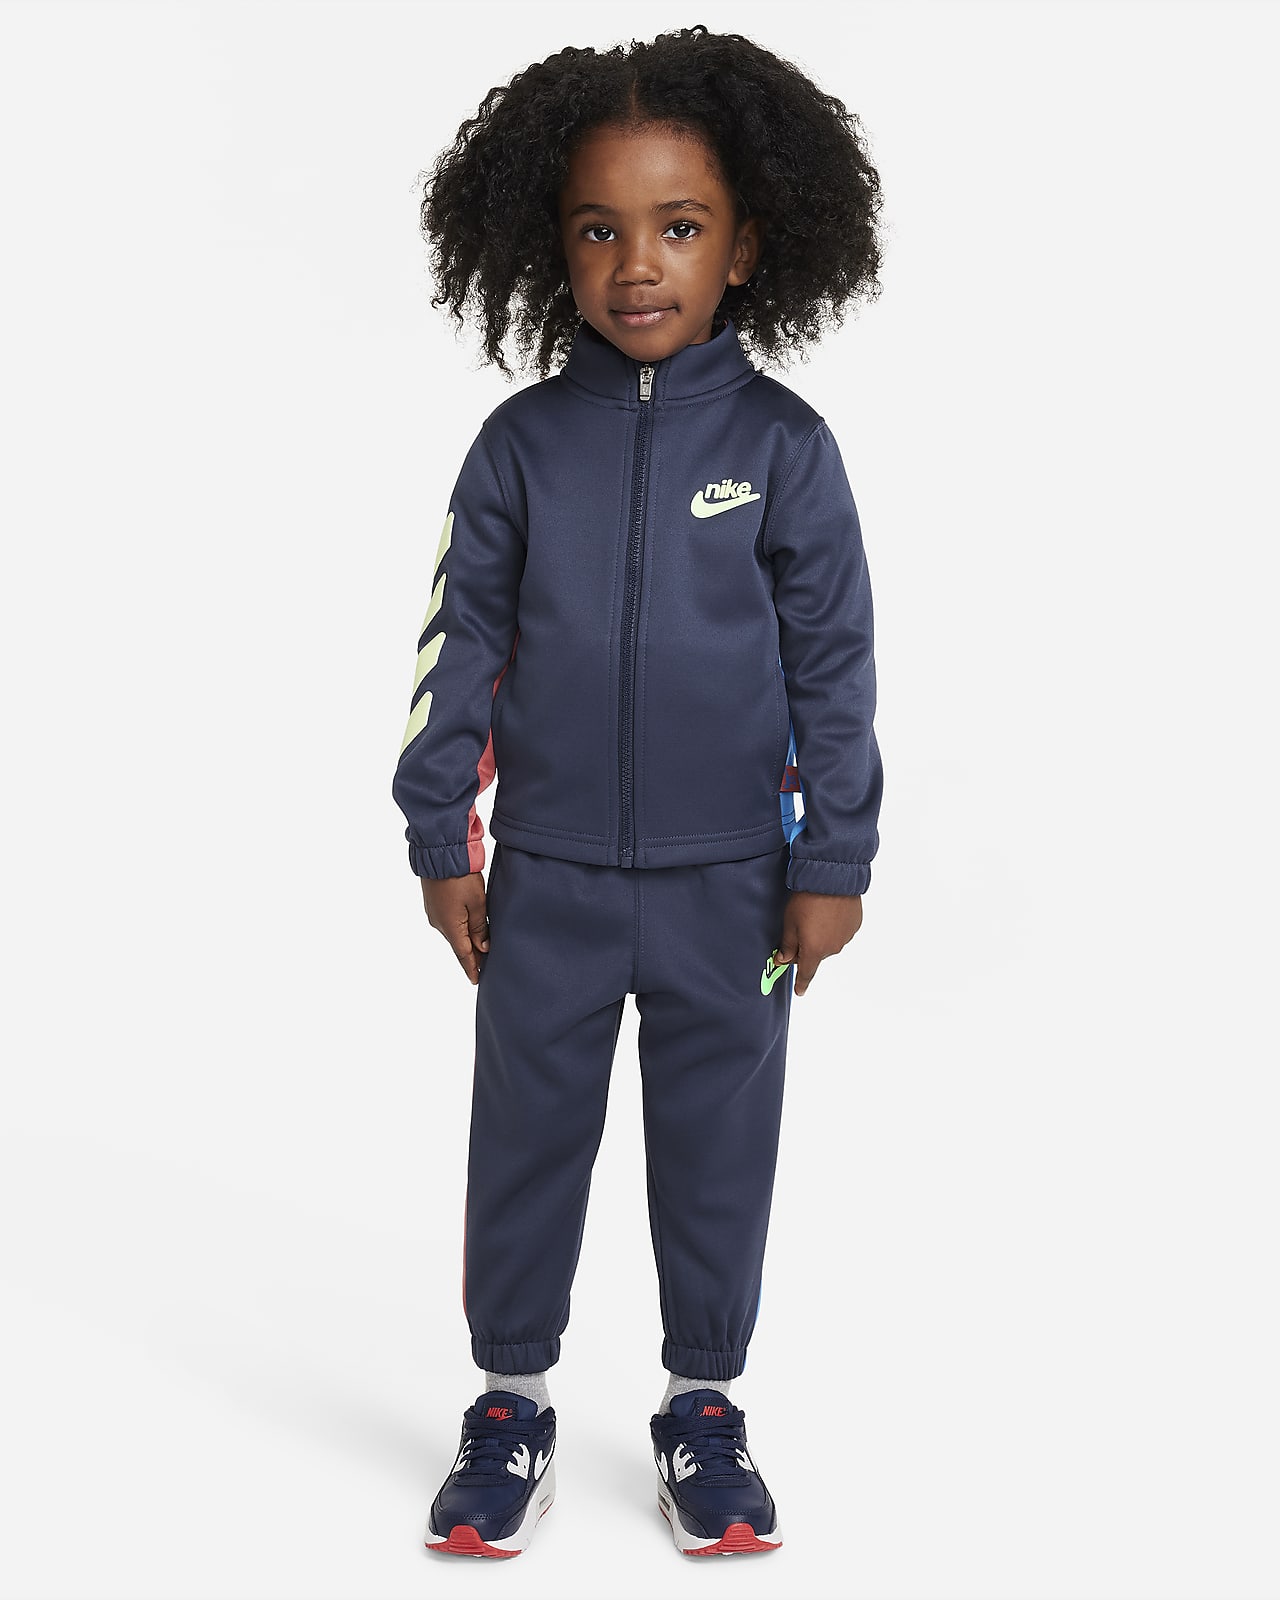 Nike Dri-FIT Colorblocked Toddler 2-Piece Full-Zip Set